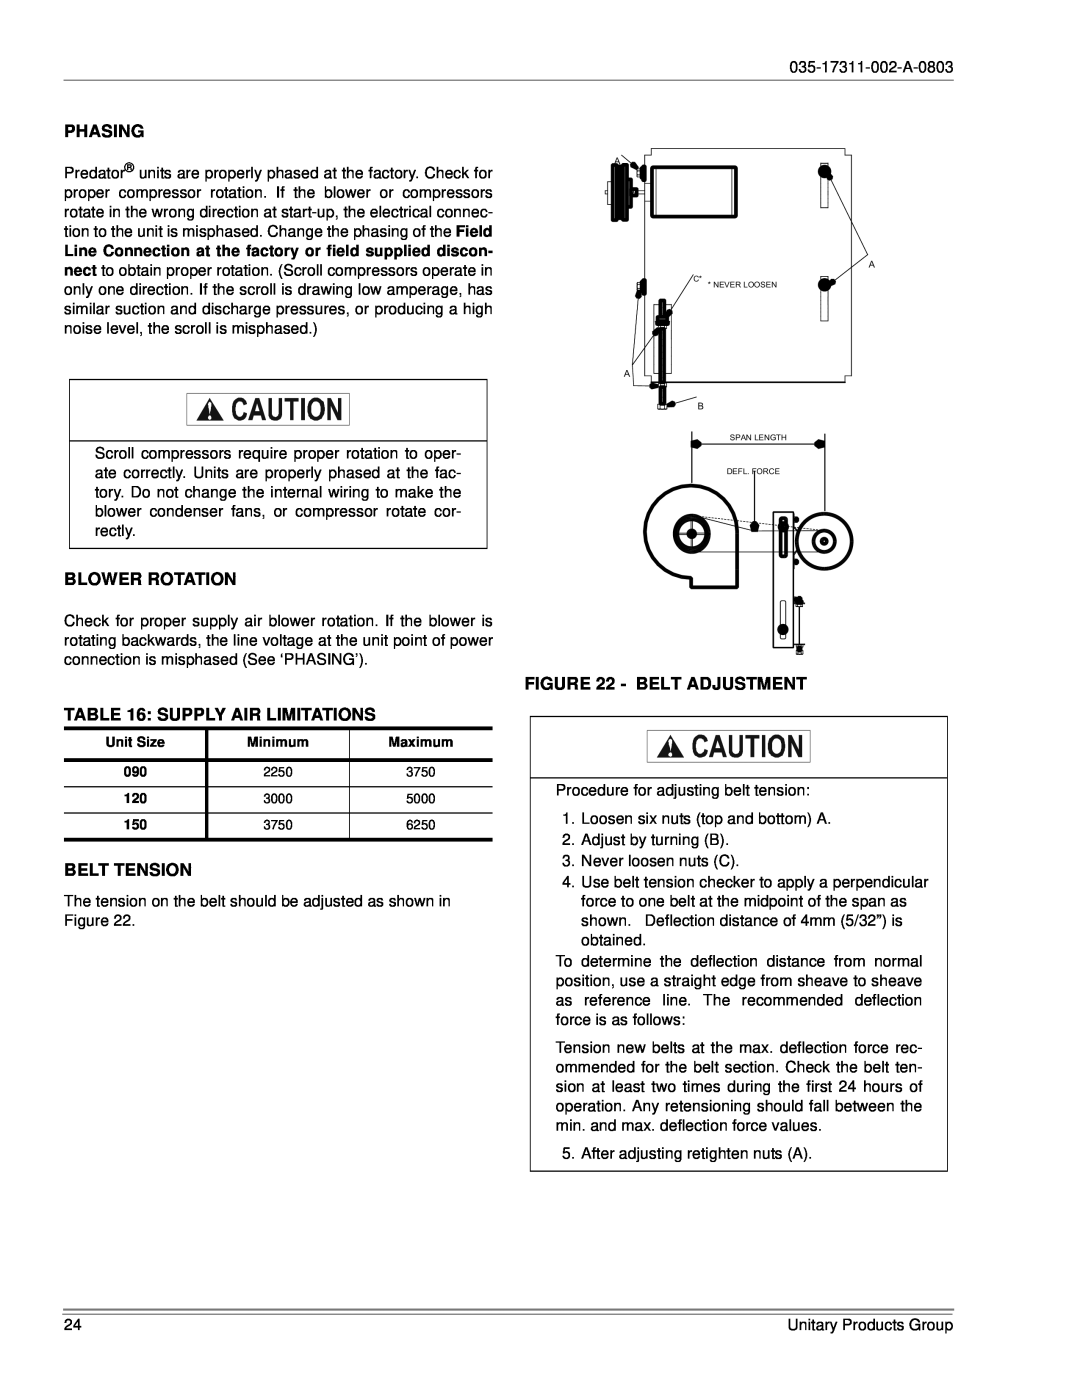 York 150, 120 installation manual Phasing, Blower Rotation, Supply Air Limitations, Belt Tension, Belt Adjustment 